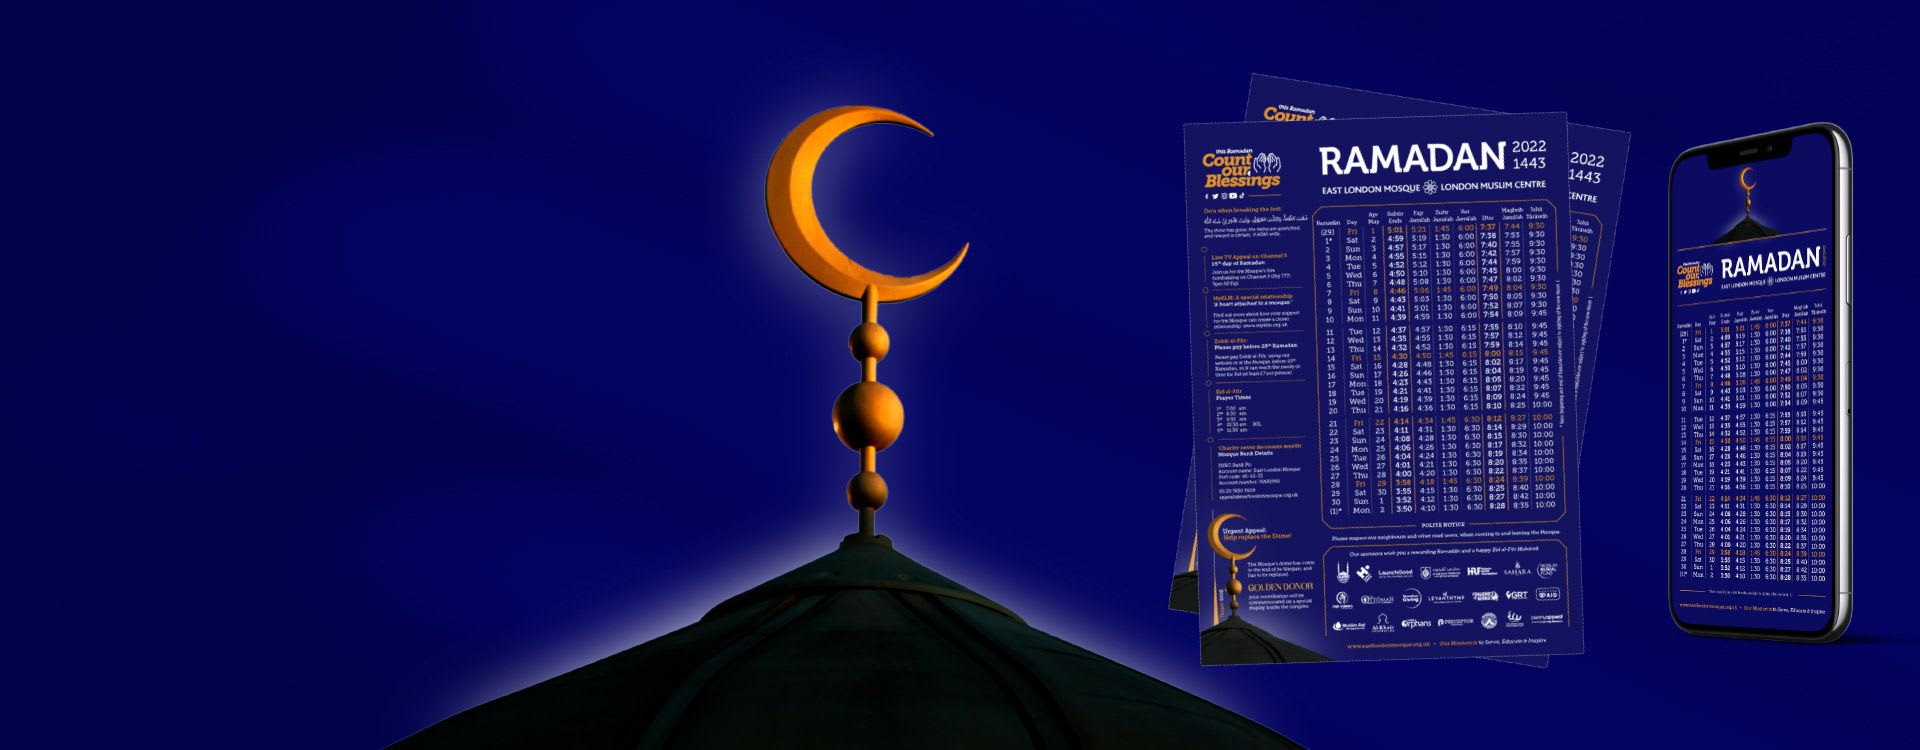 Ramadan Timetable 2022 now available